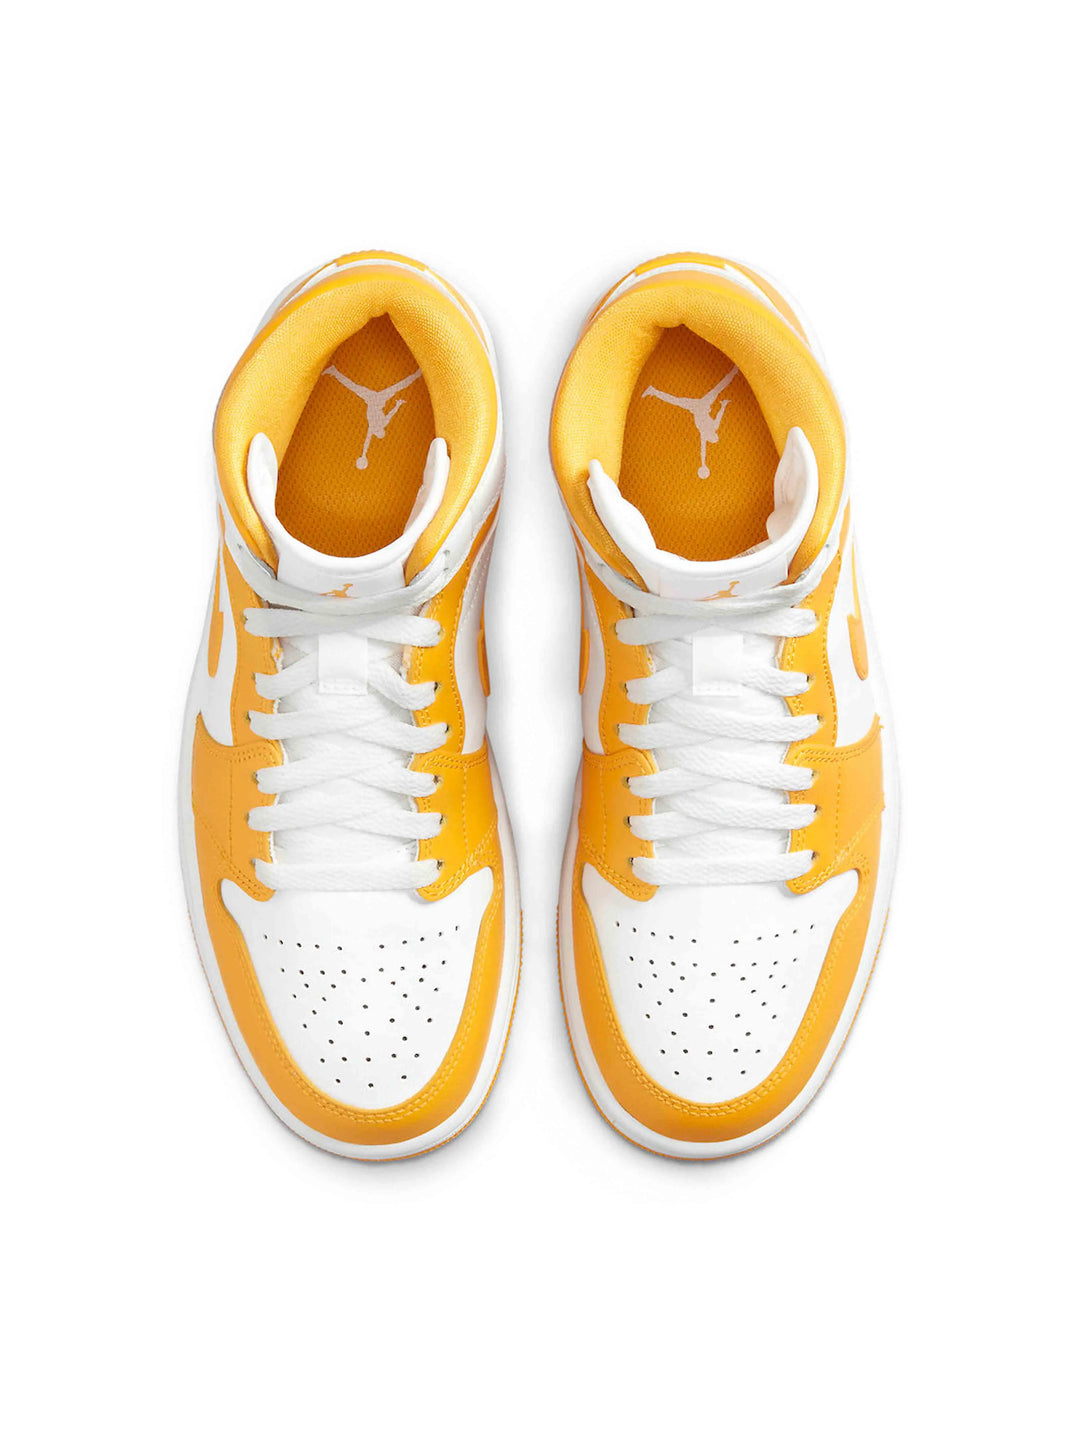 Nike Air Jordan 1 Mid White University Gold [W] Prior